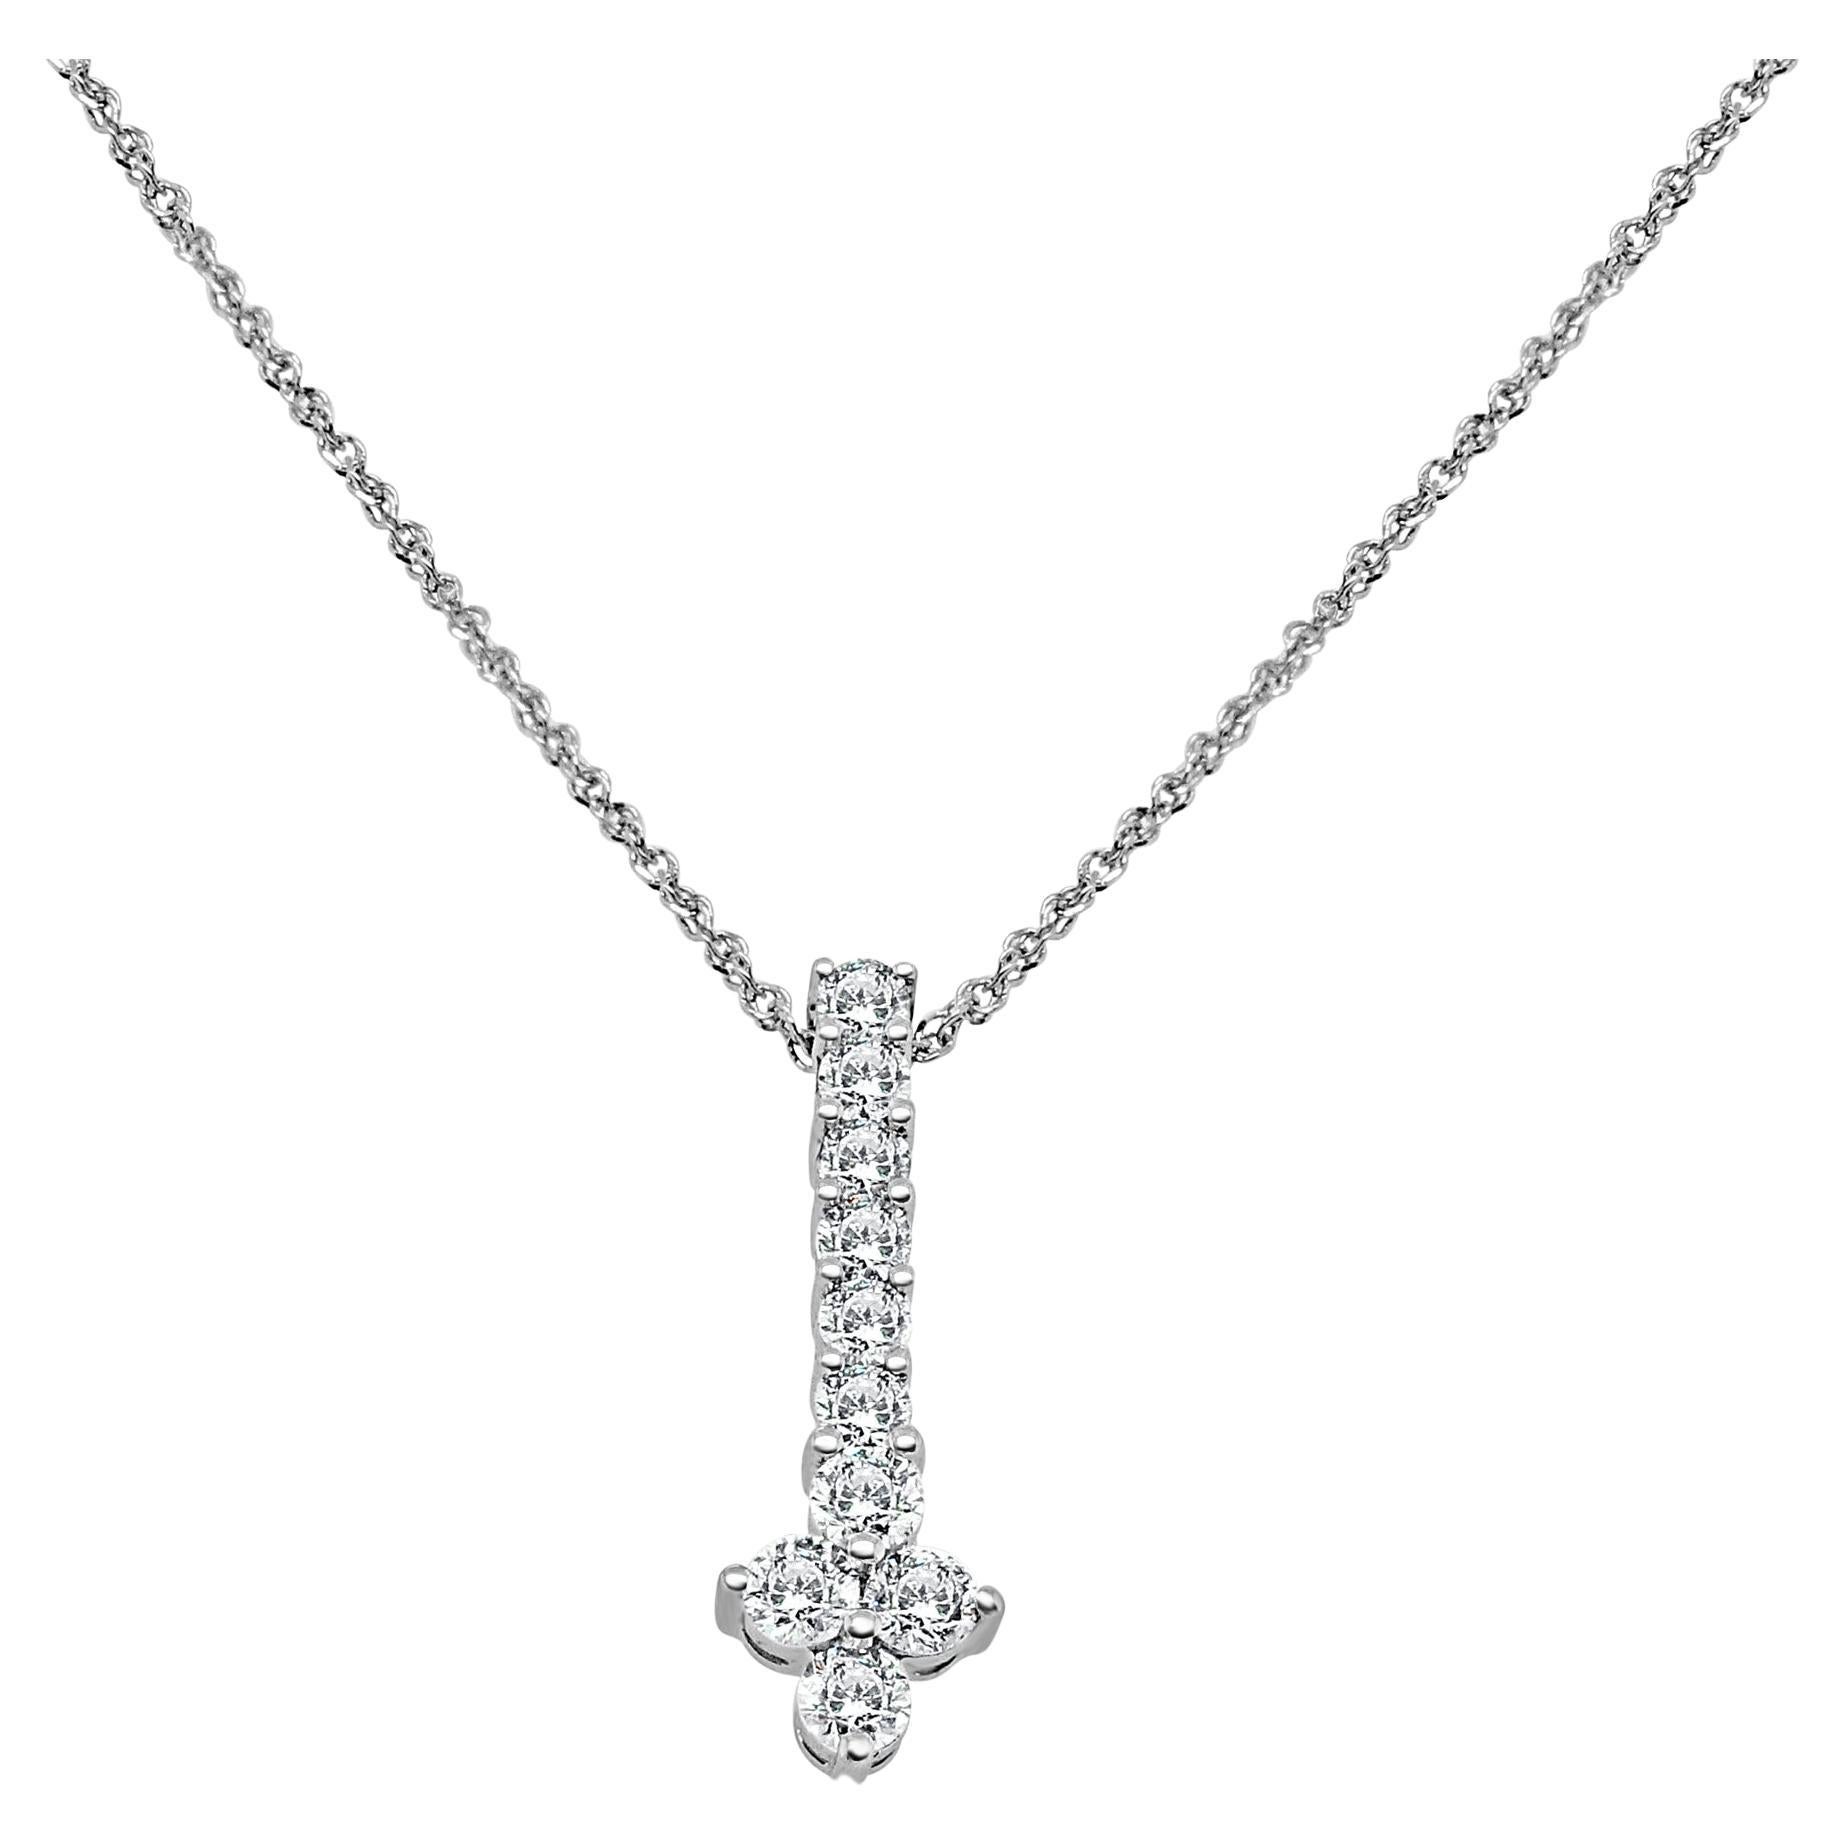 18 Karat White Gold Diamond Pendant with Chain